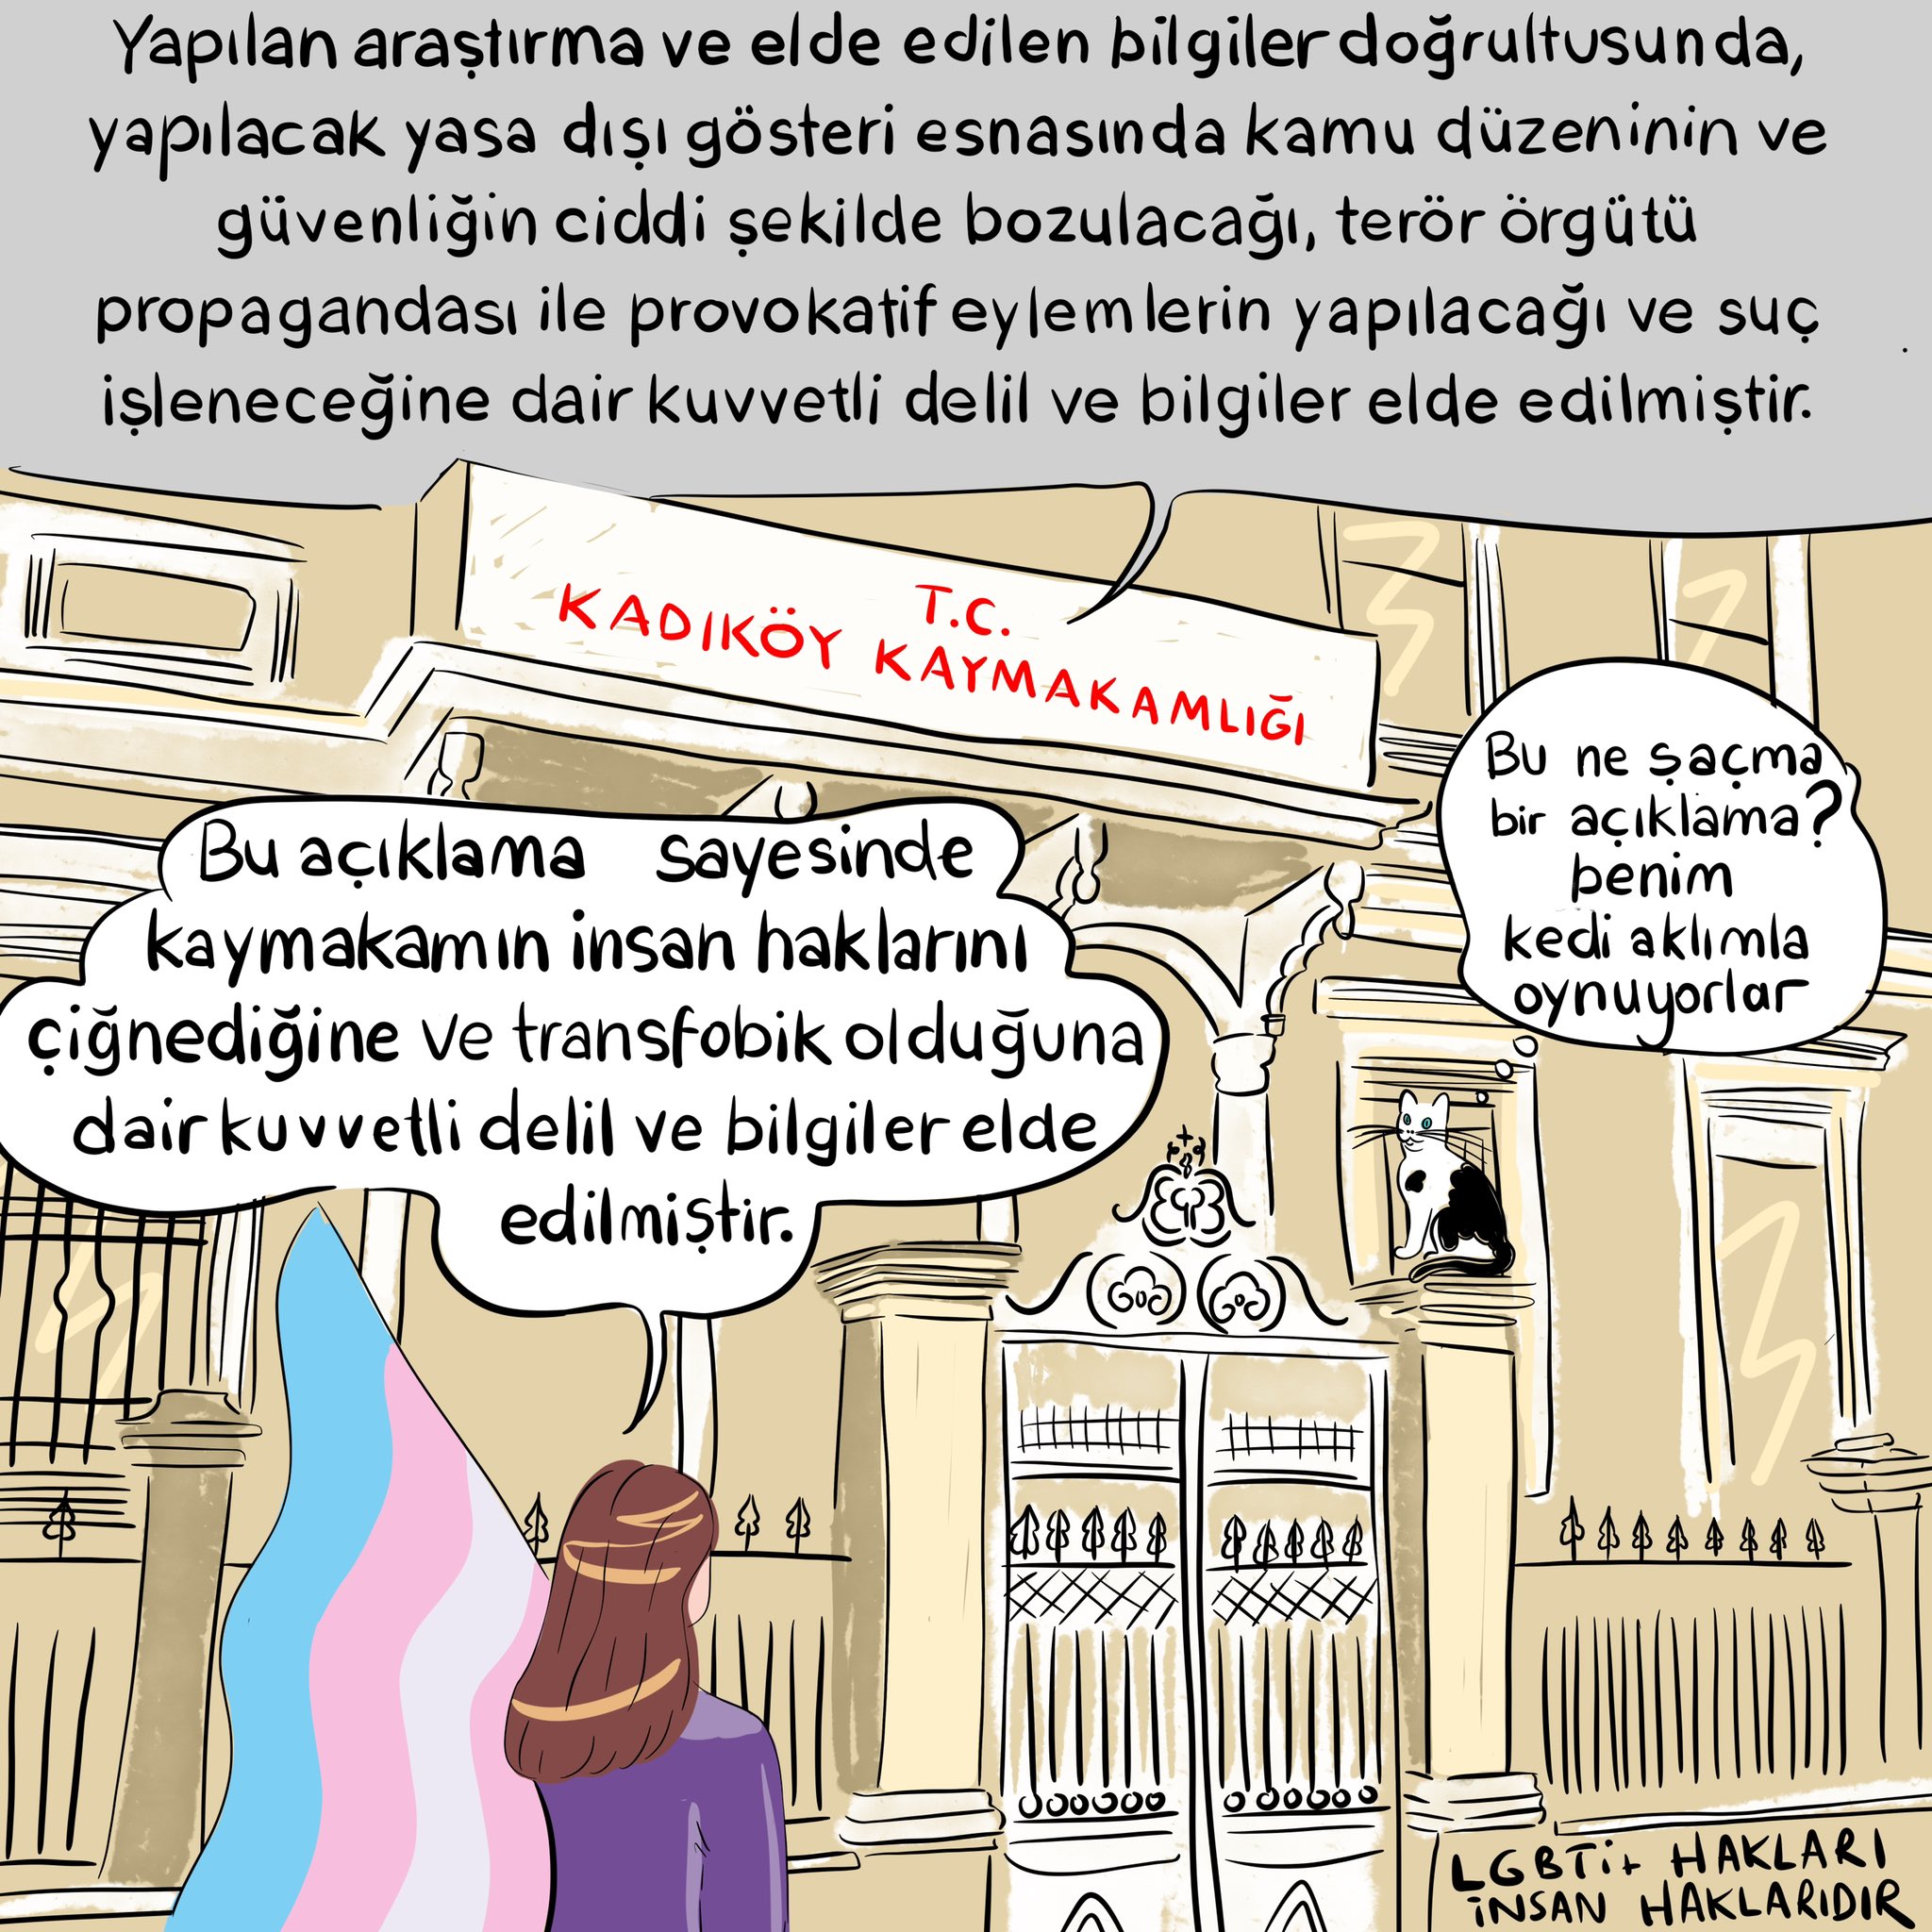 Semih Özkarakaş, Kadıköy Kaymakamlığı yasağını çizdi | Kaos GL - LGBTİ+ Haber Portalı Gökkuşağı Forumu Köşe Yazısı